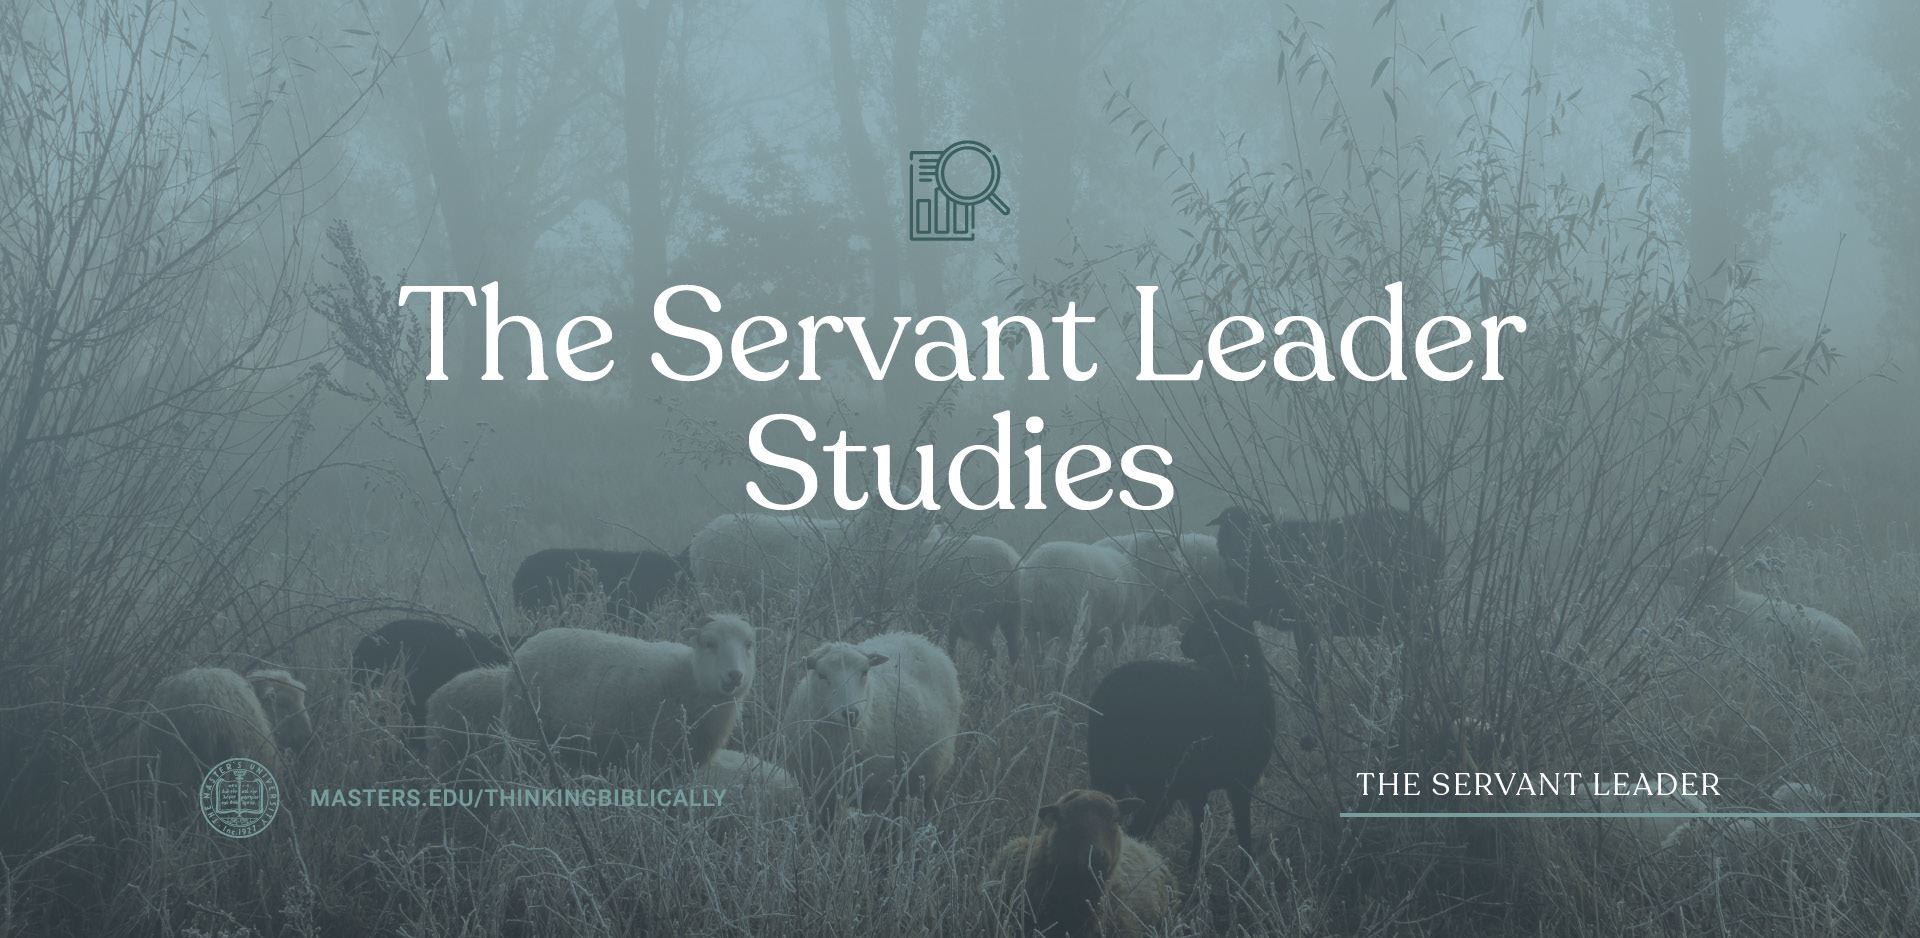 The Servant Leader Studies Featured Image